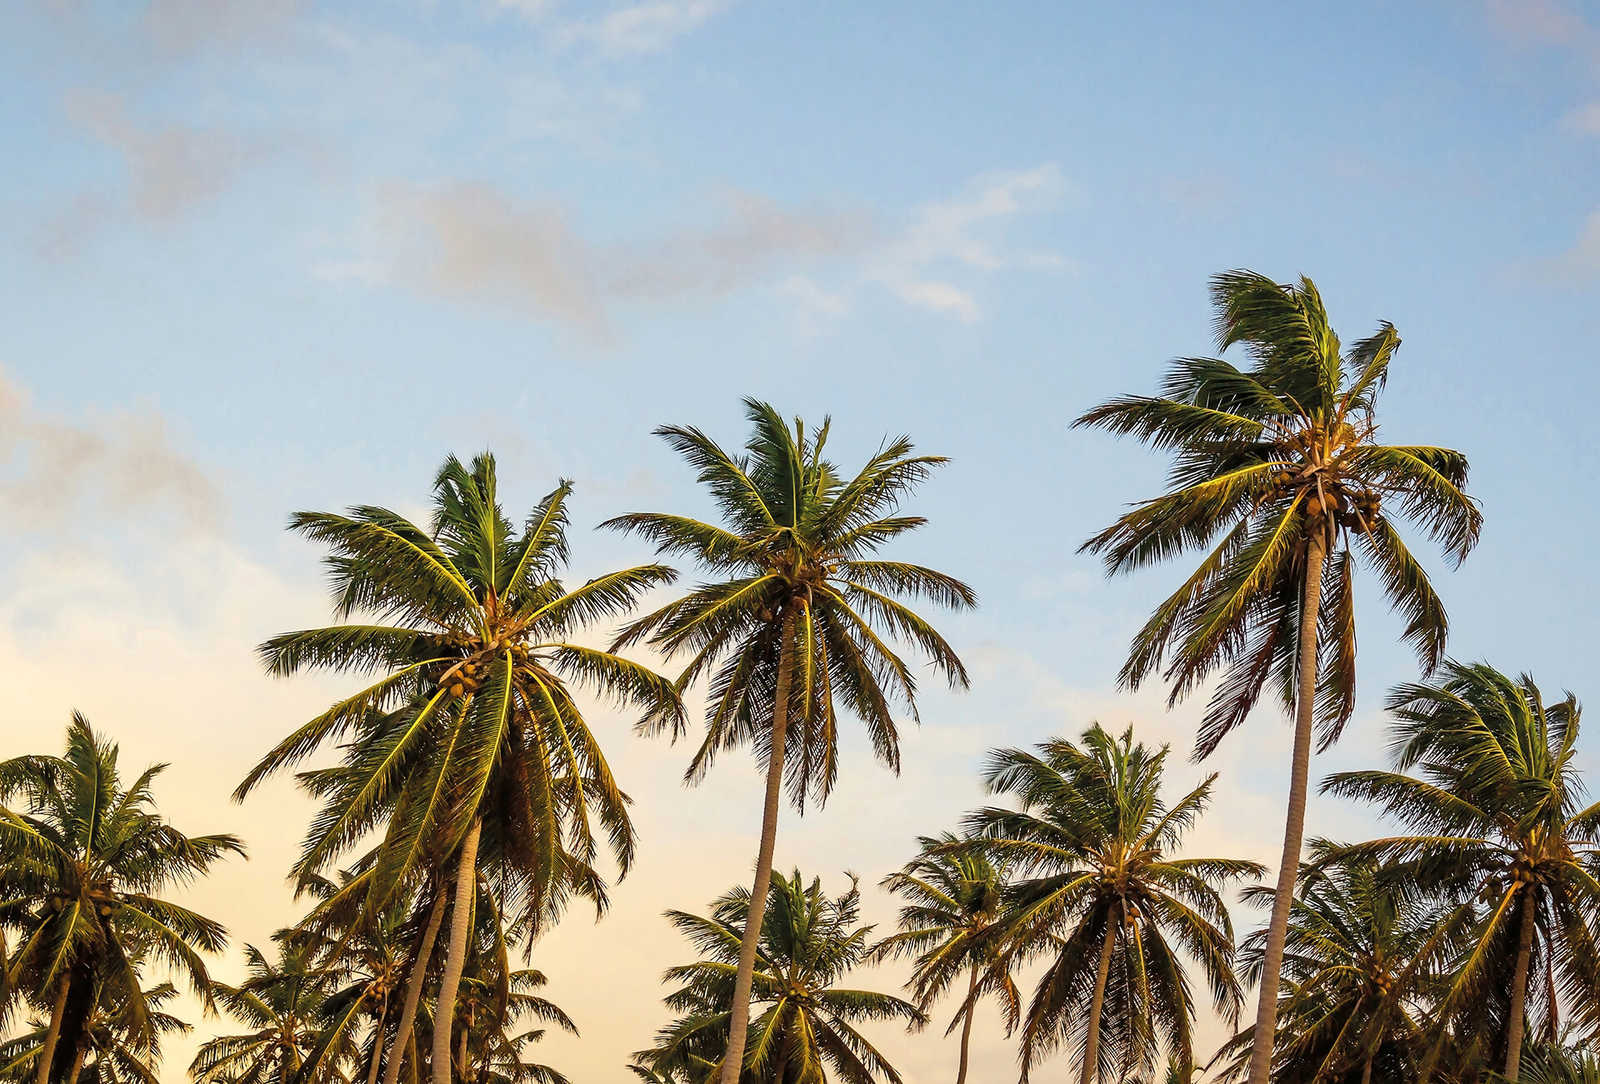         Fototapete Palmen am Strand – Beige, Blau, Grün
    